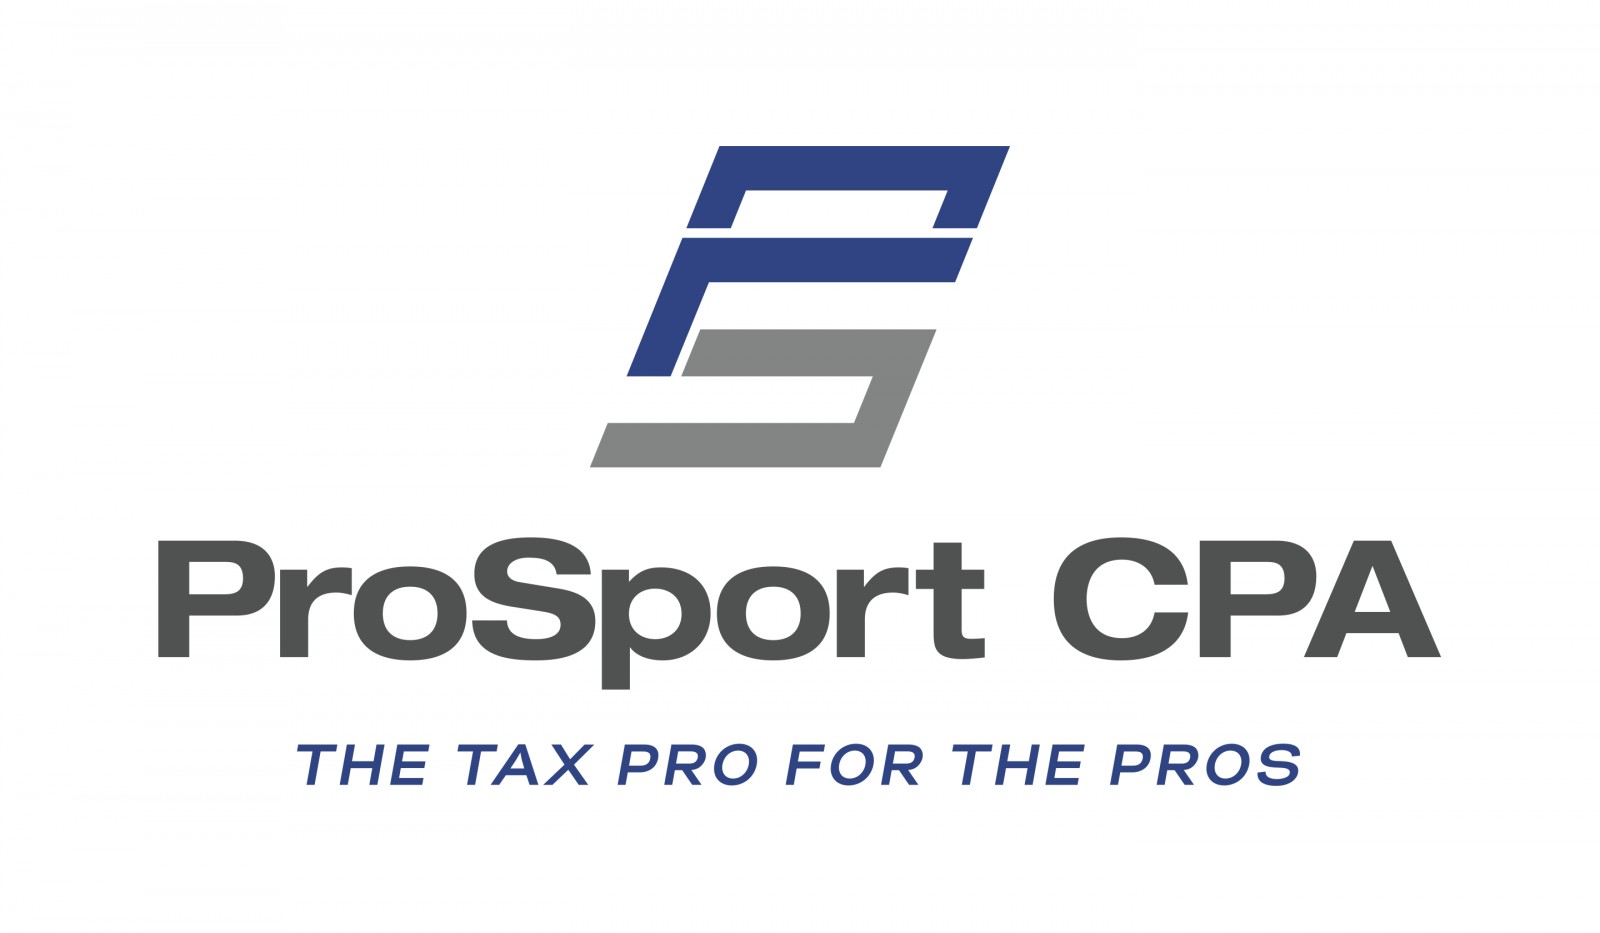 prosport cpa